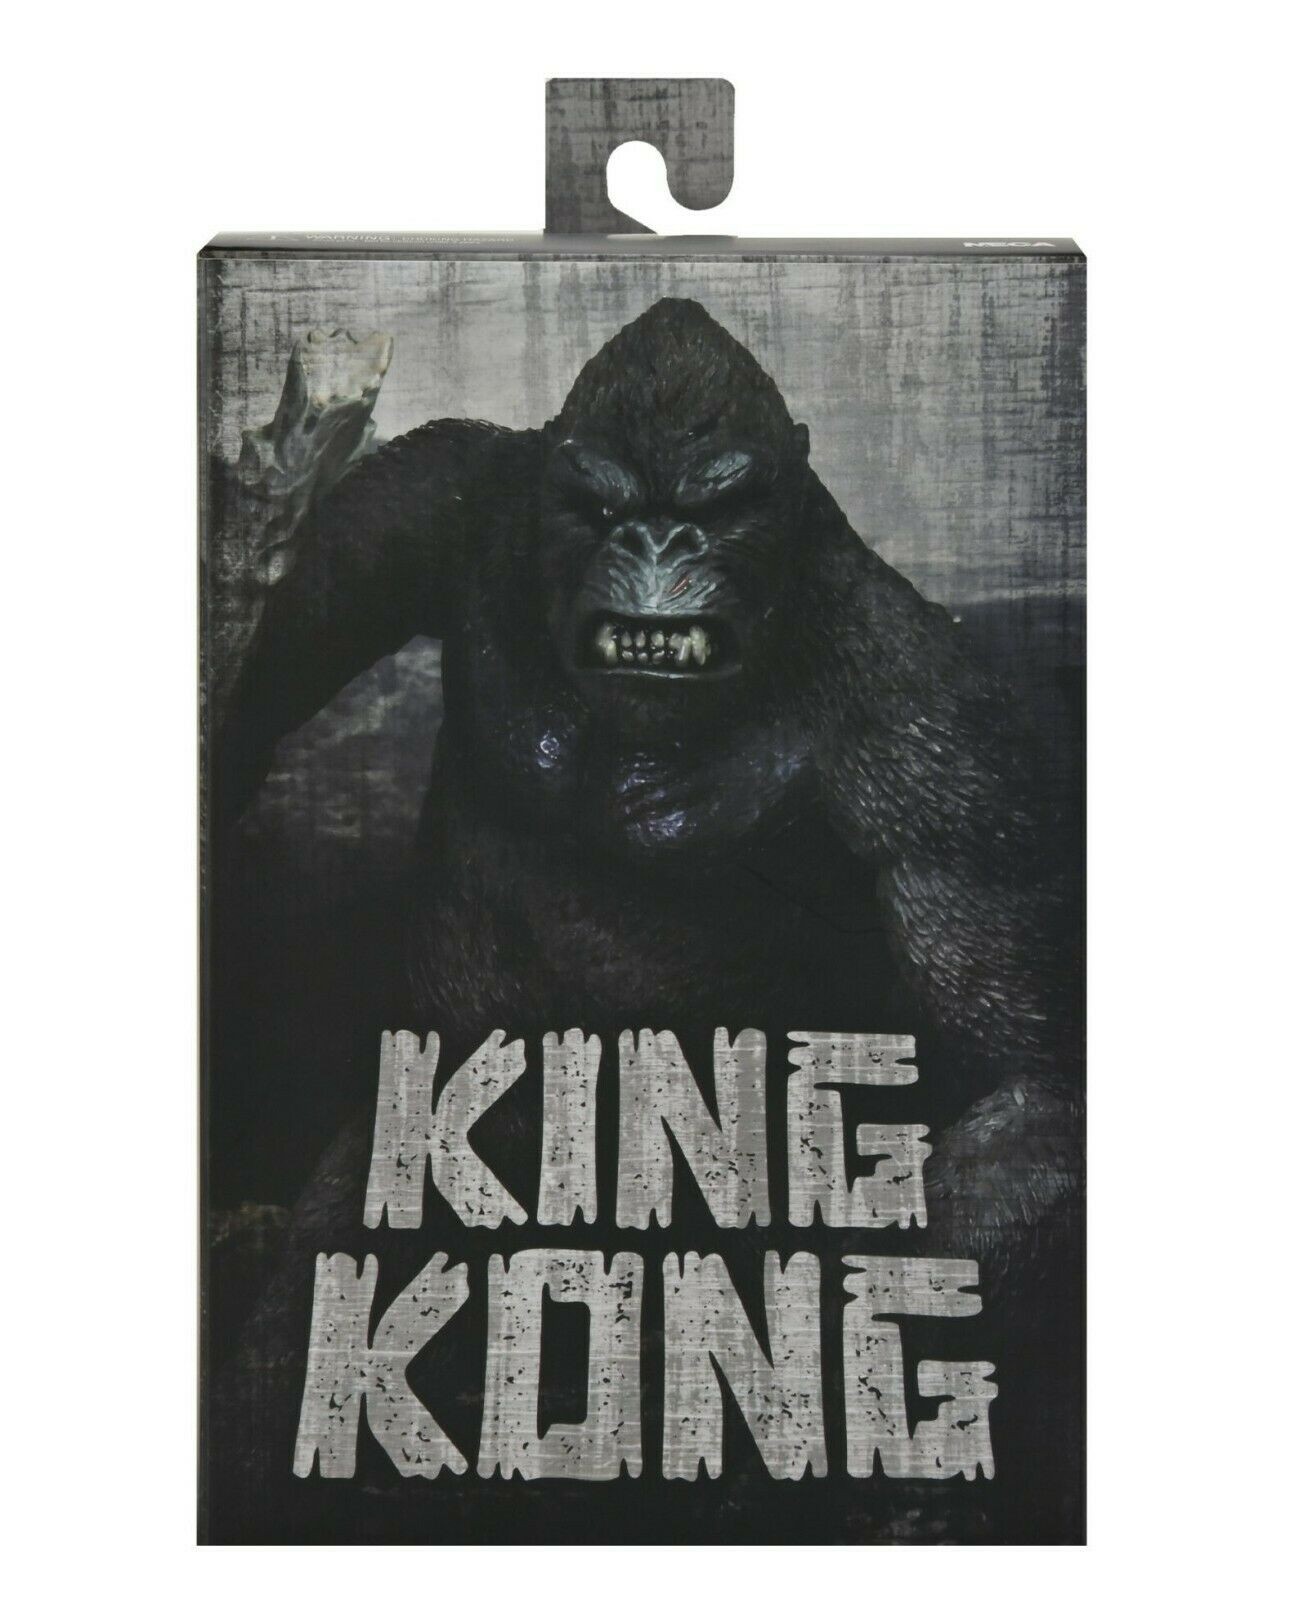 Kong Skull Island Ultimate King Kong 7 inch Action Figure - 1 -